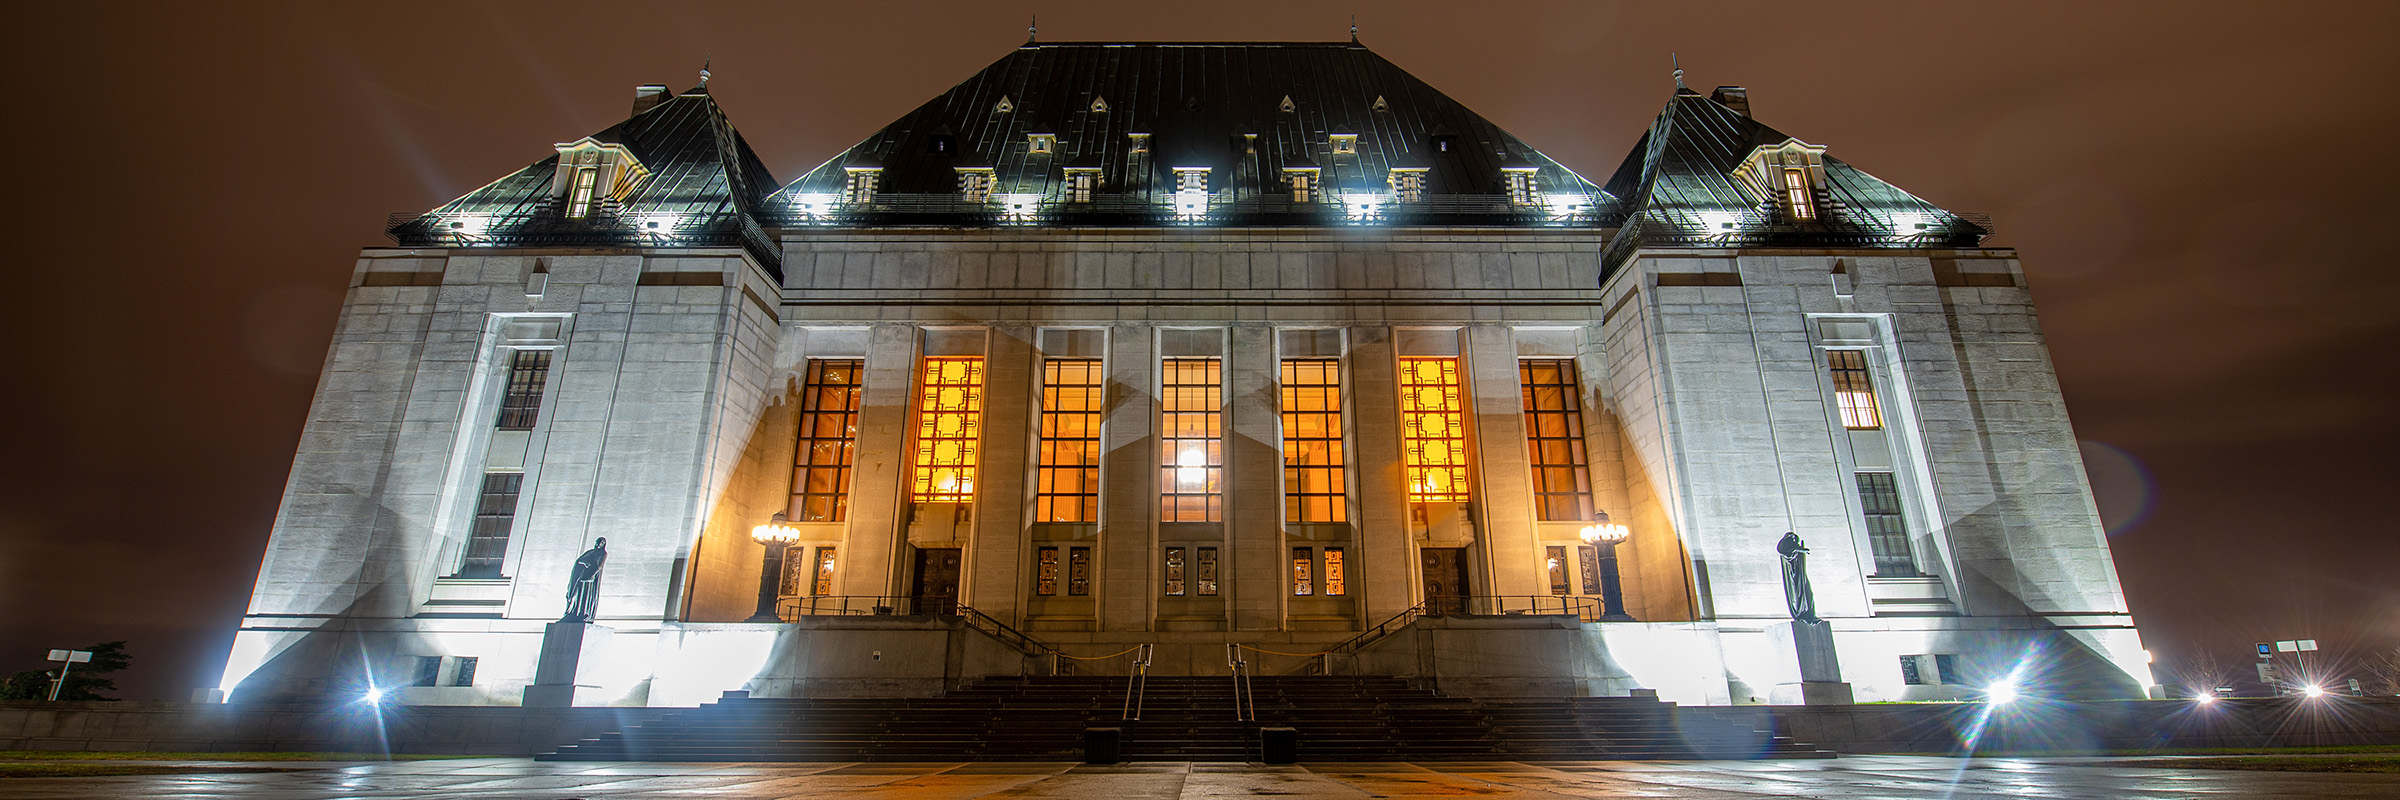 Supreme Court of Canada night